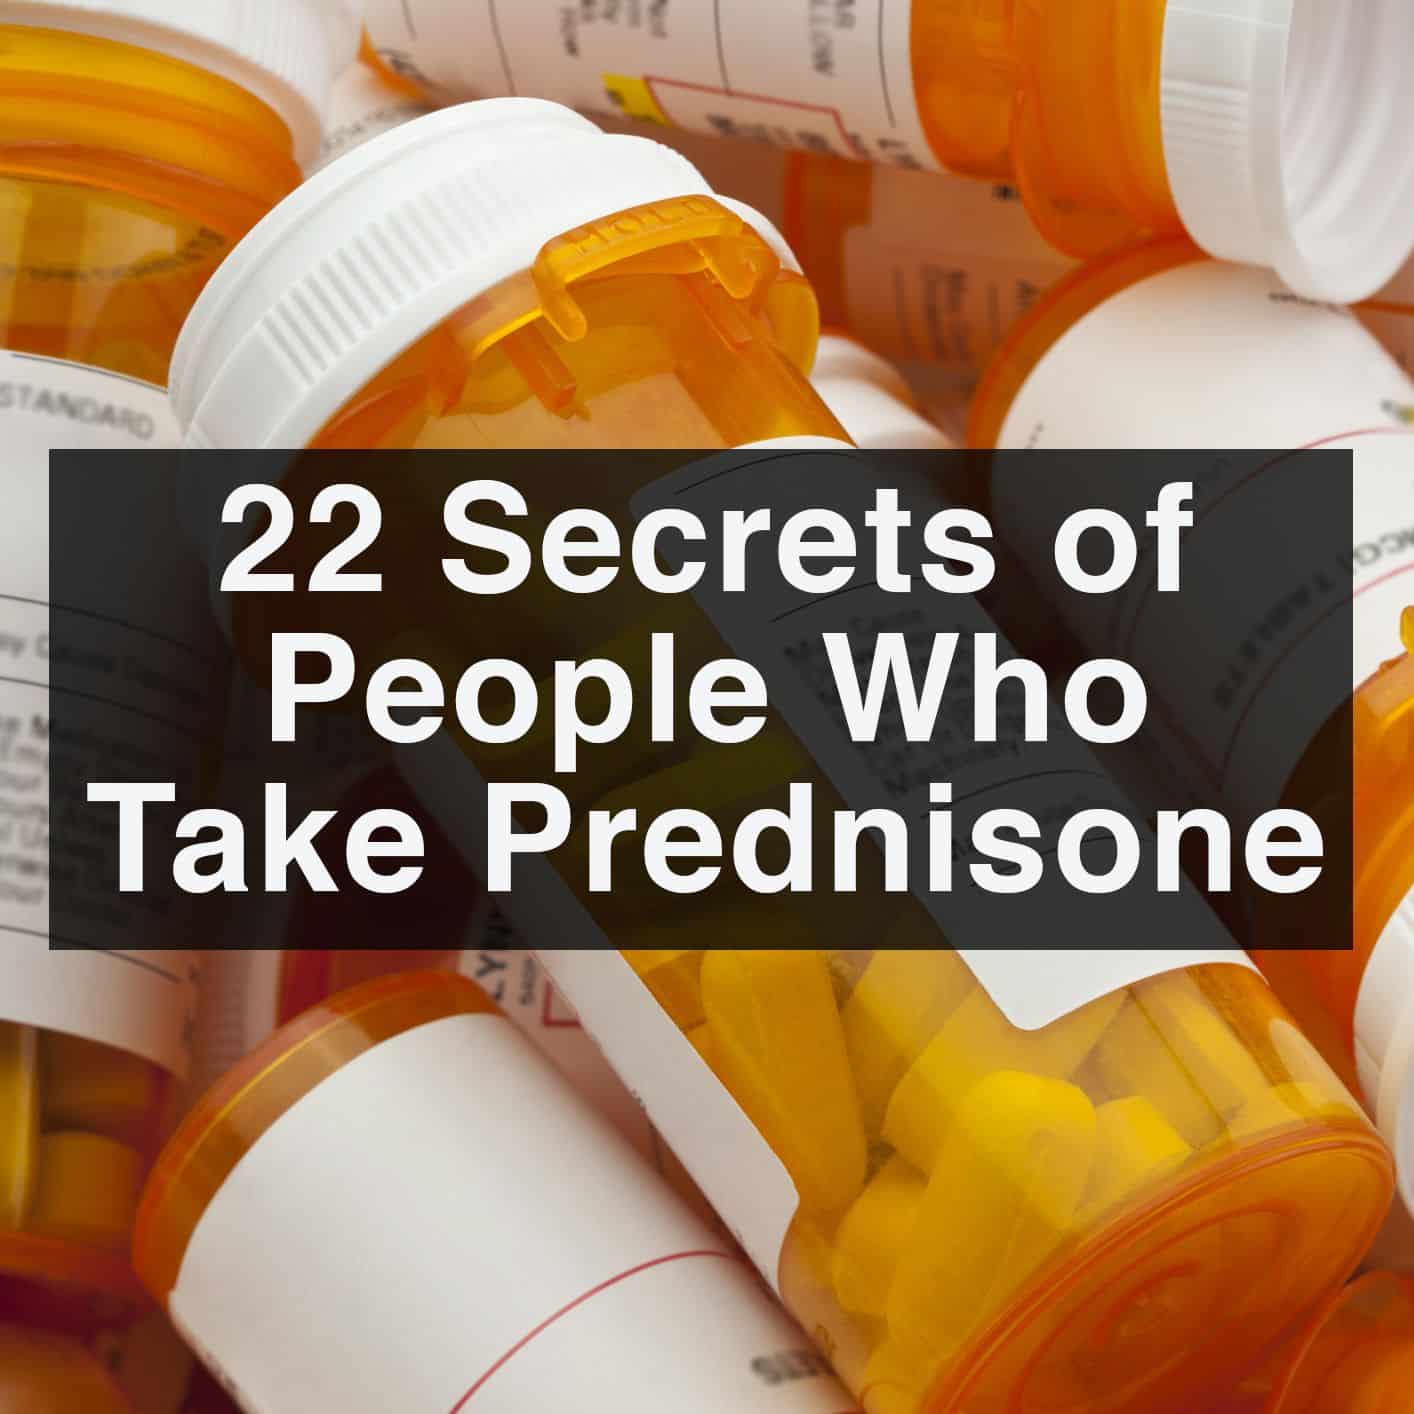 22 Secrets of People Who Take Prednisone